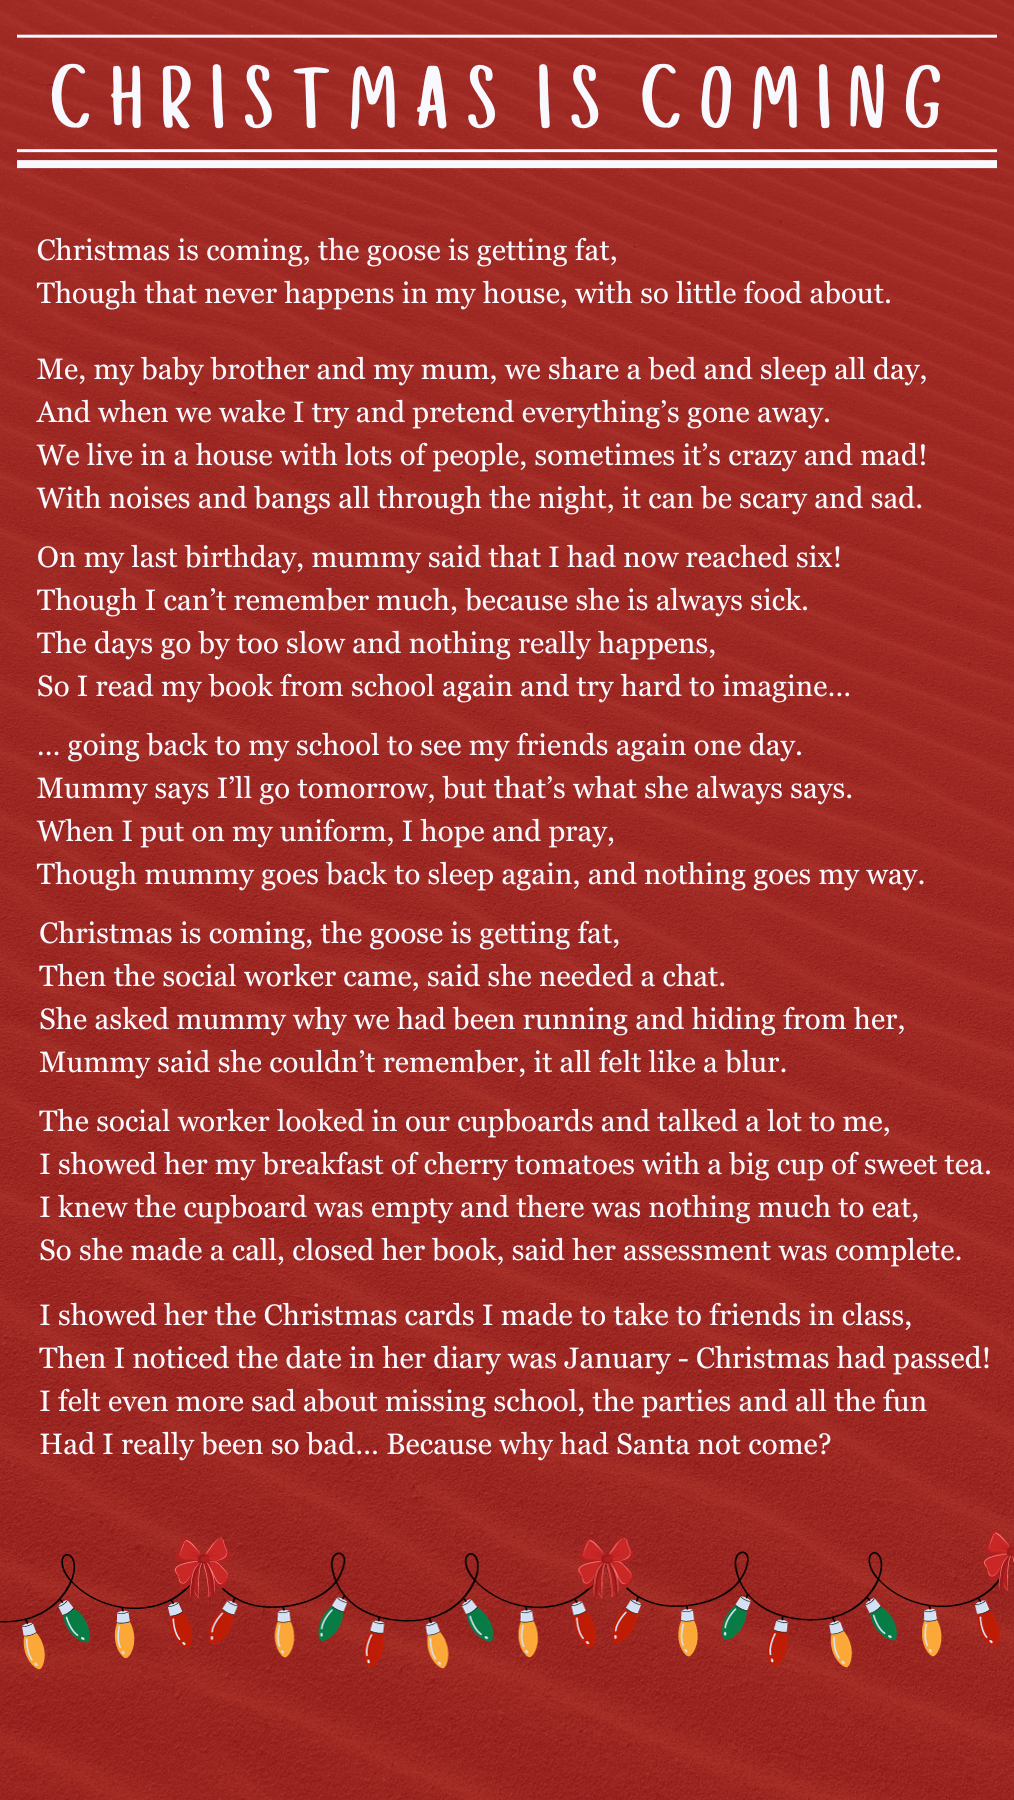 Christmas poem